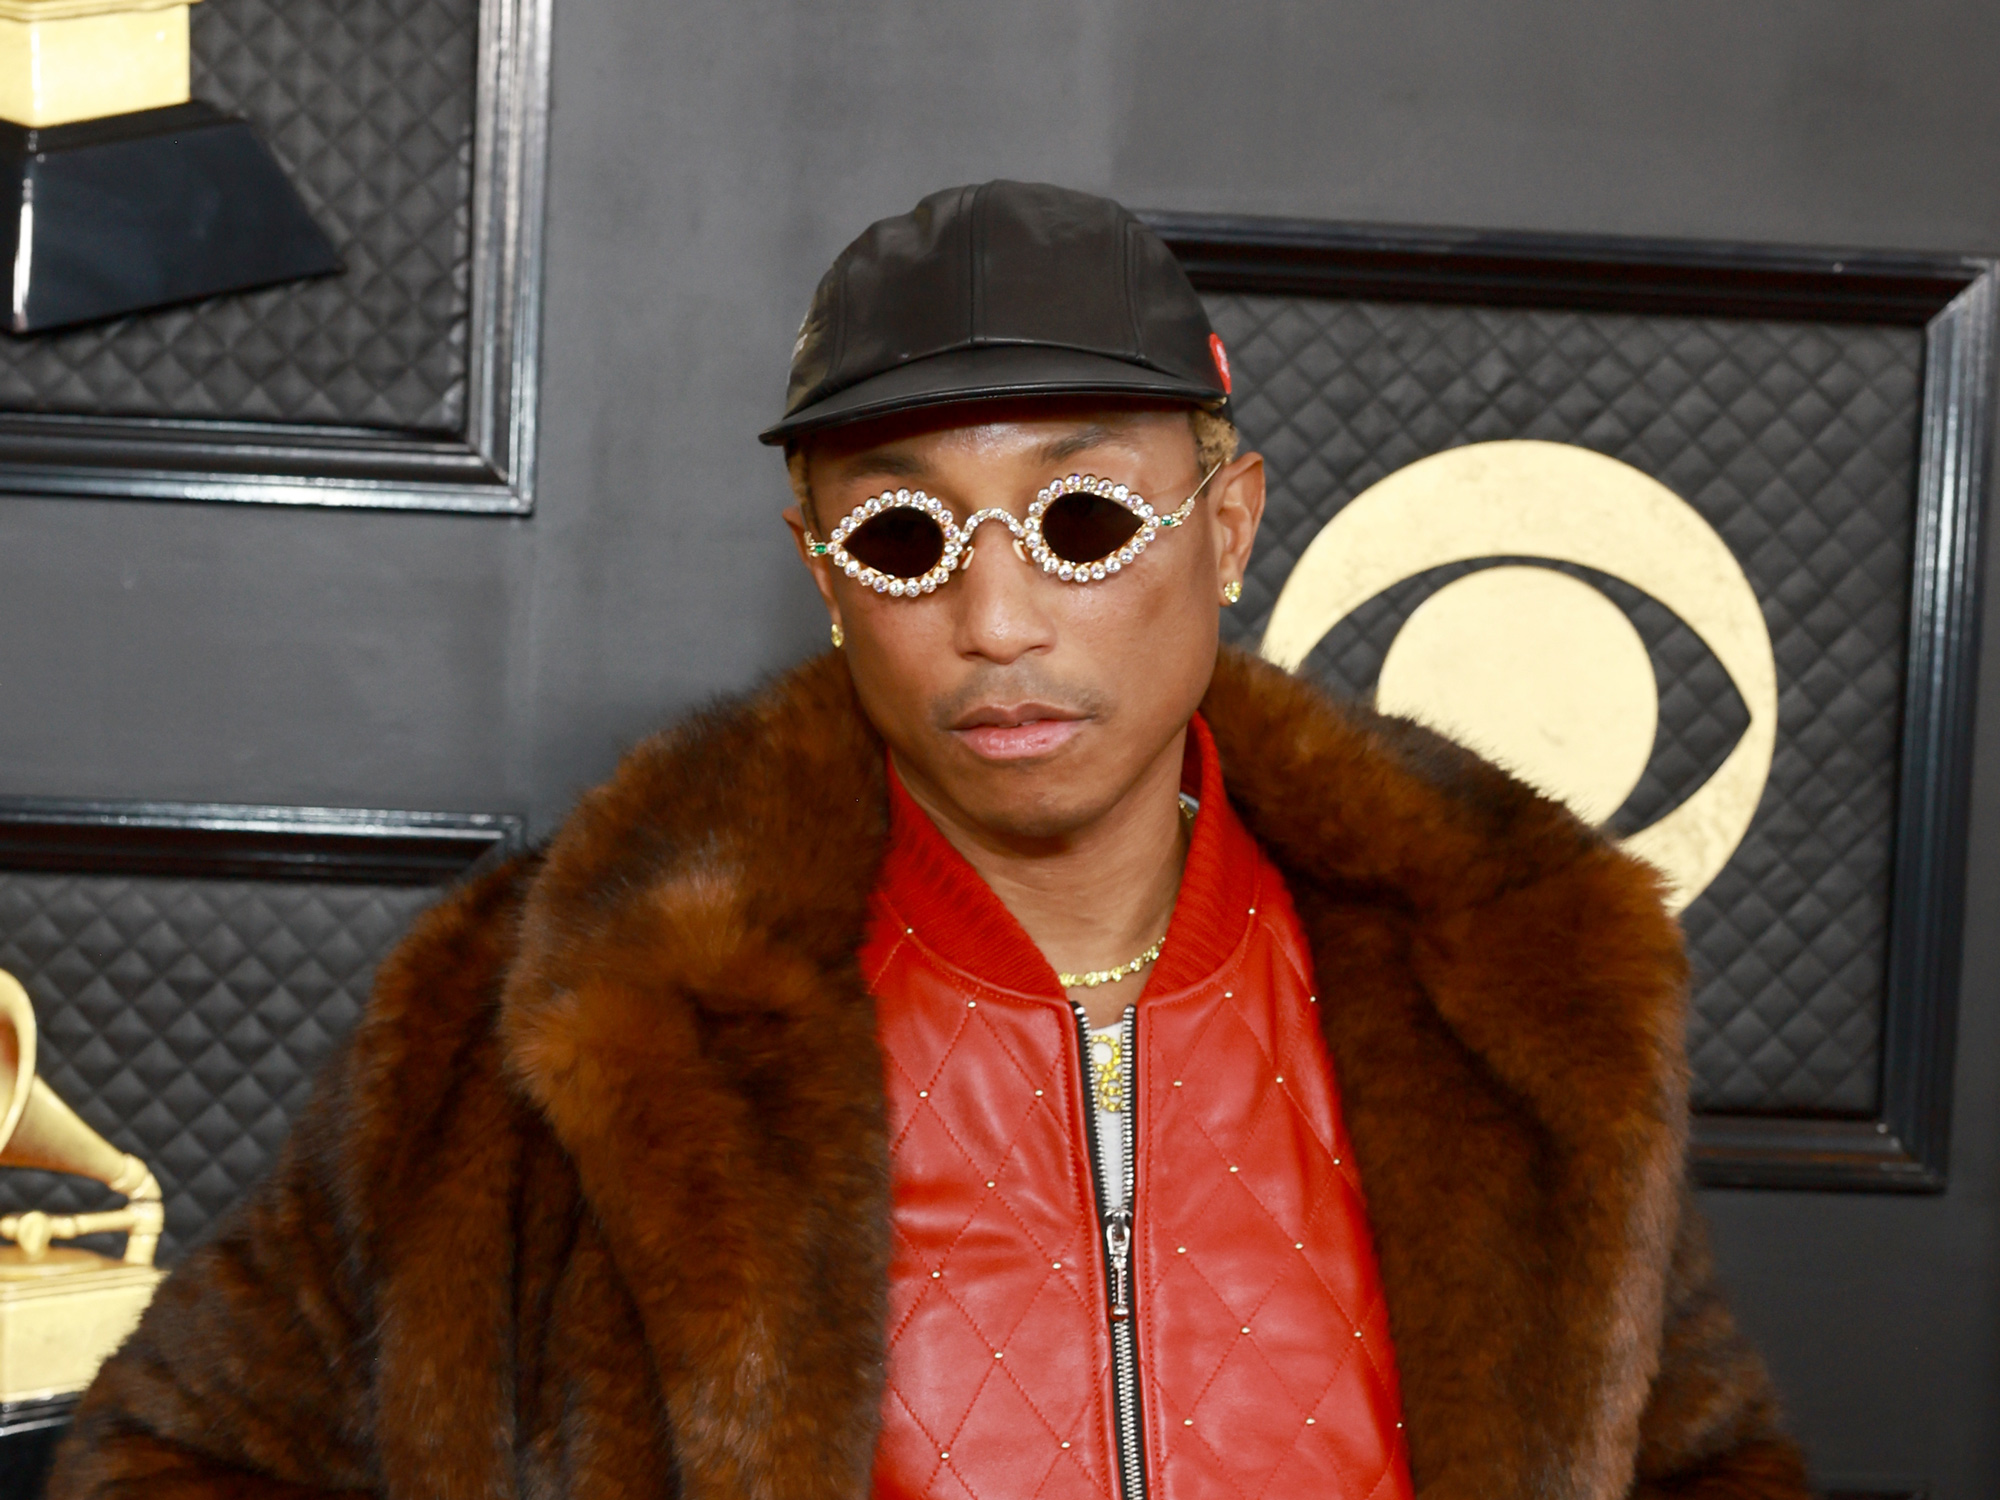 Pharrell Williams Is the New Menswear Designer at Louis Vuitton